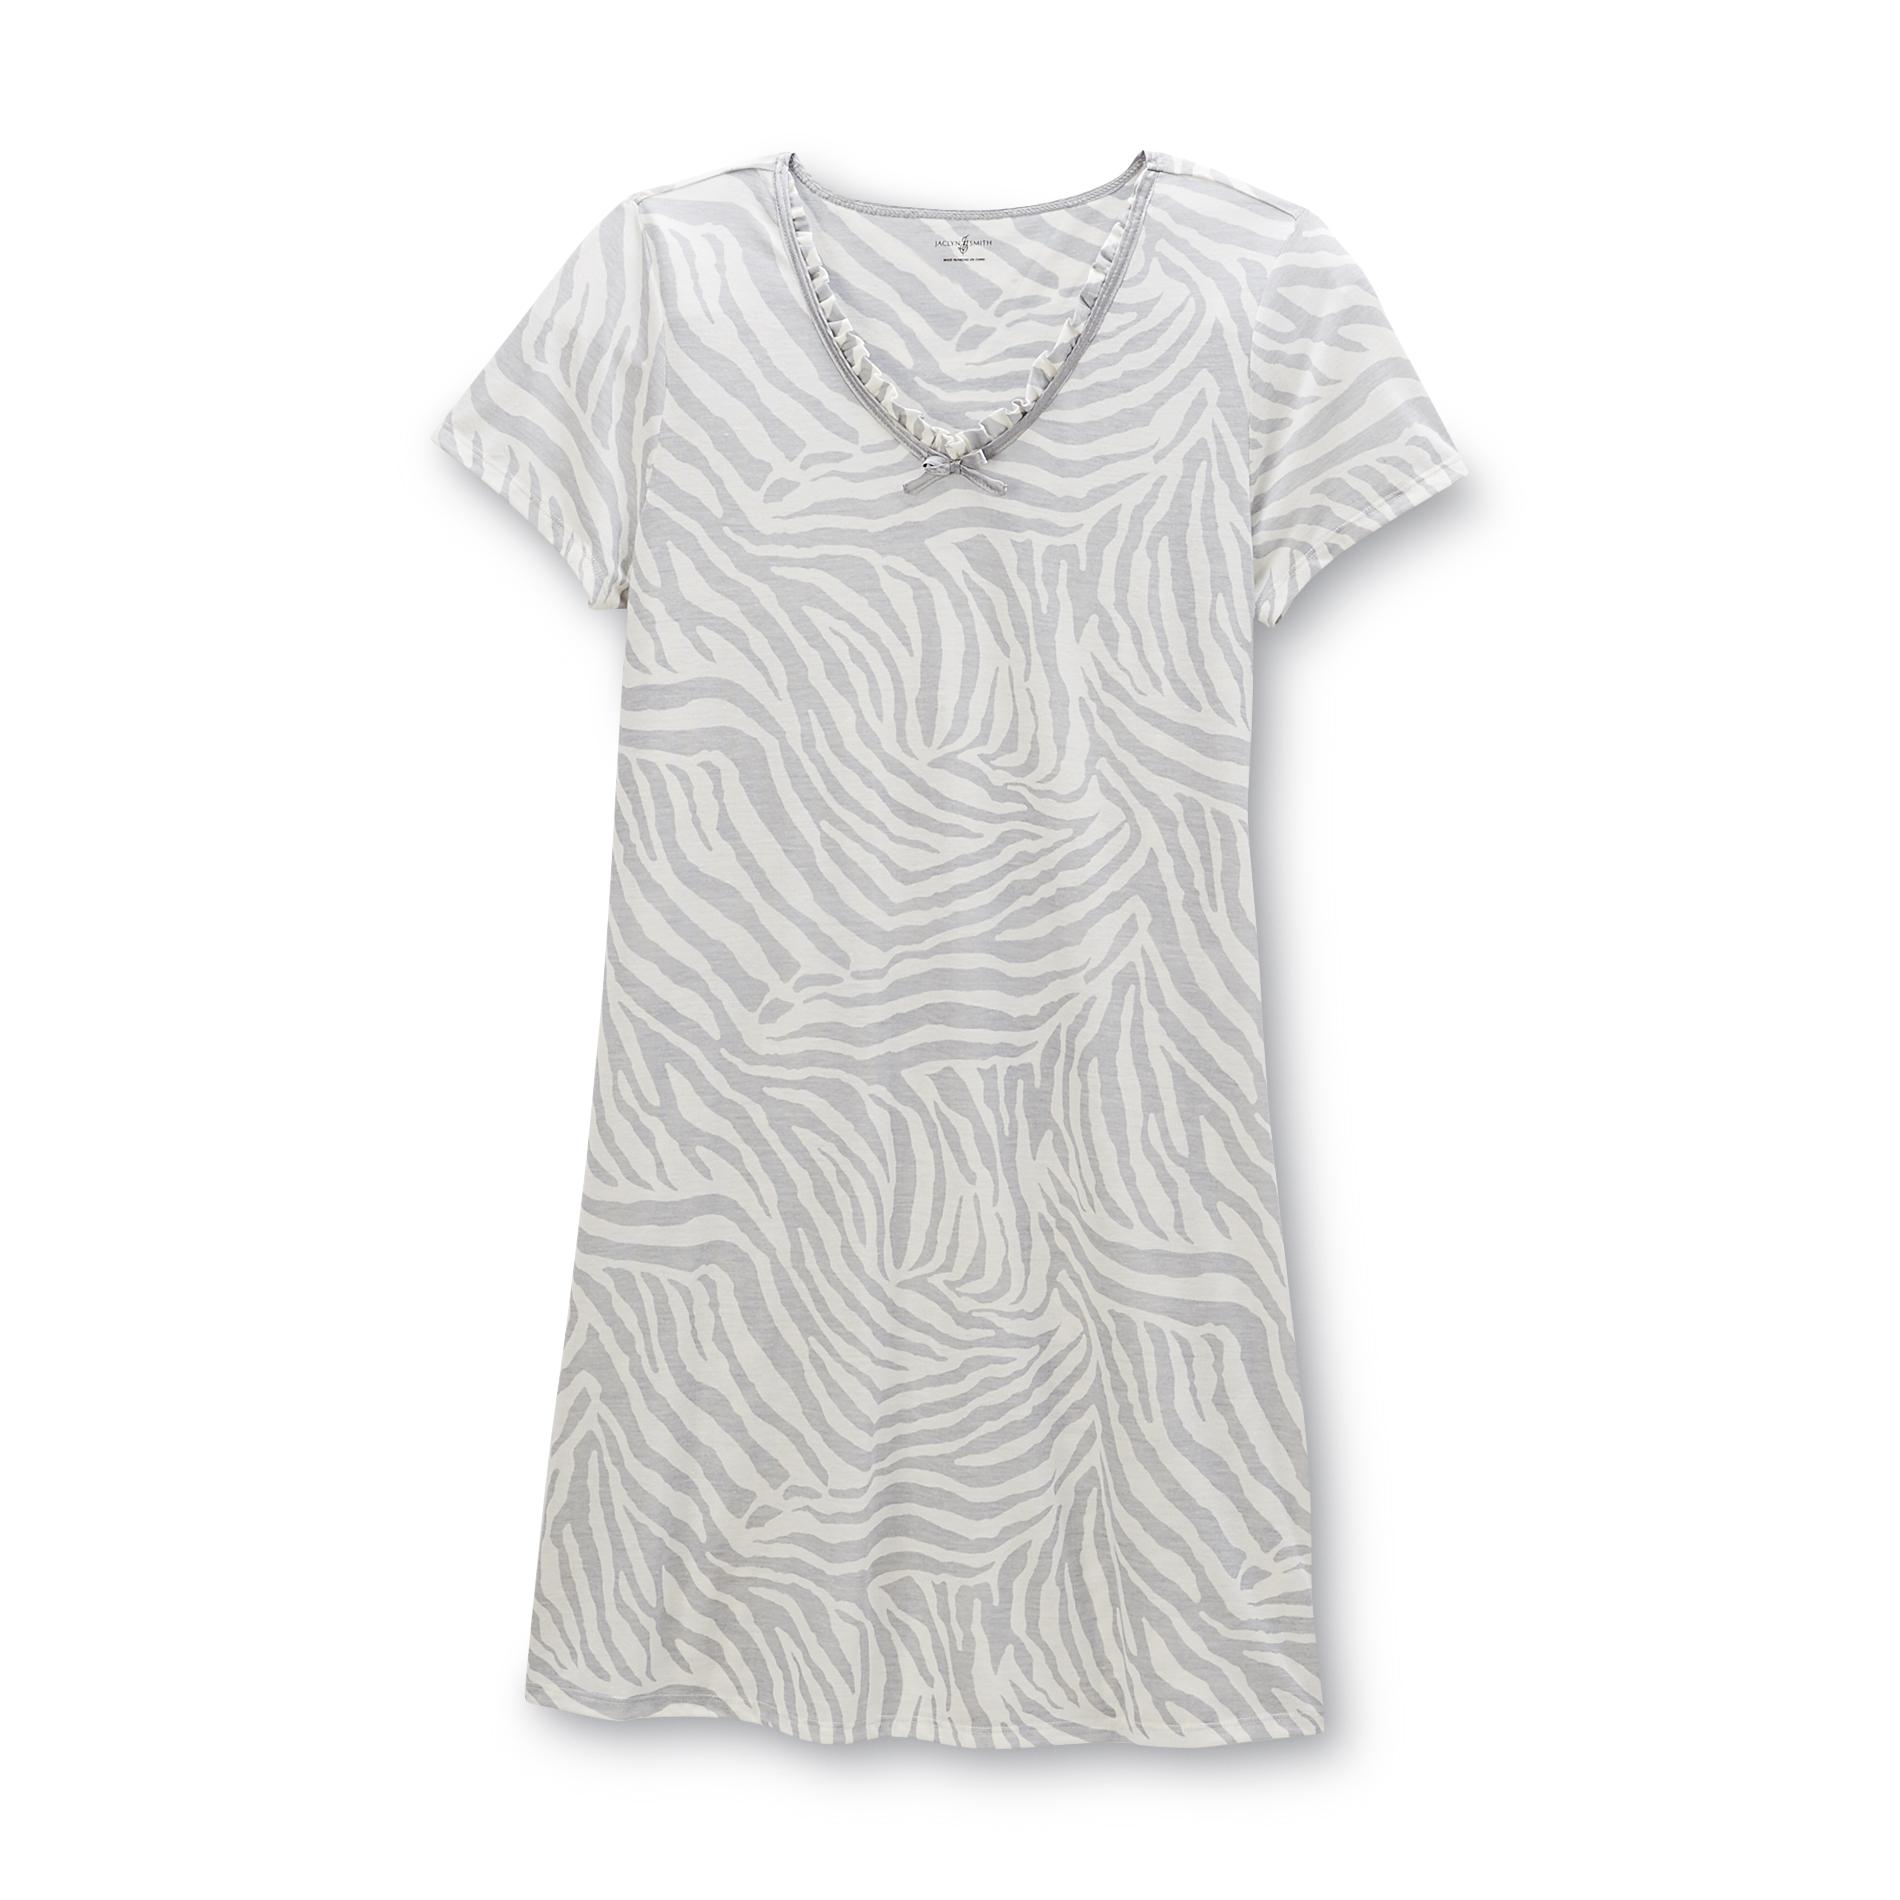 Jaclyn Smith Women's Short-Sleeve Nightgown - Zebra Print